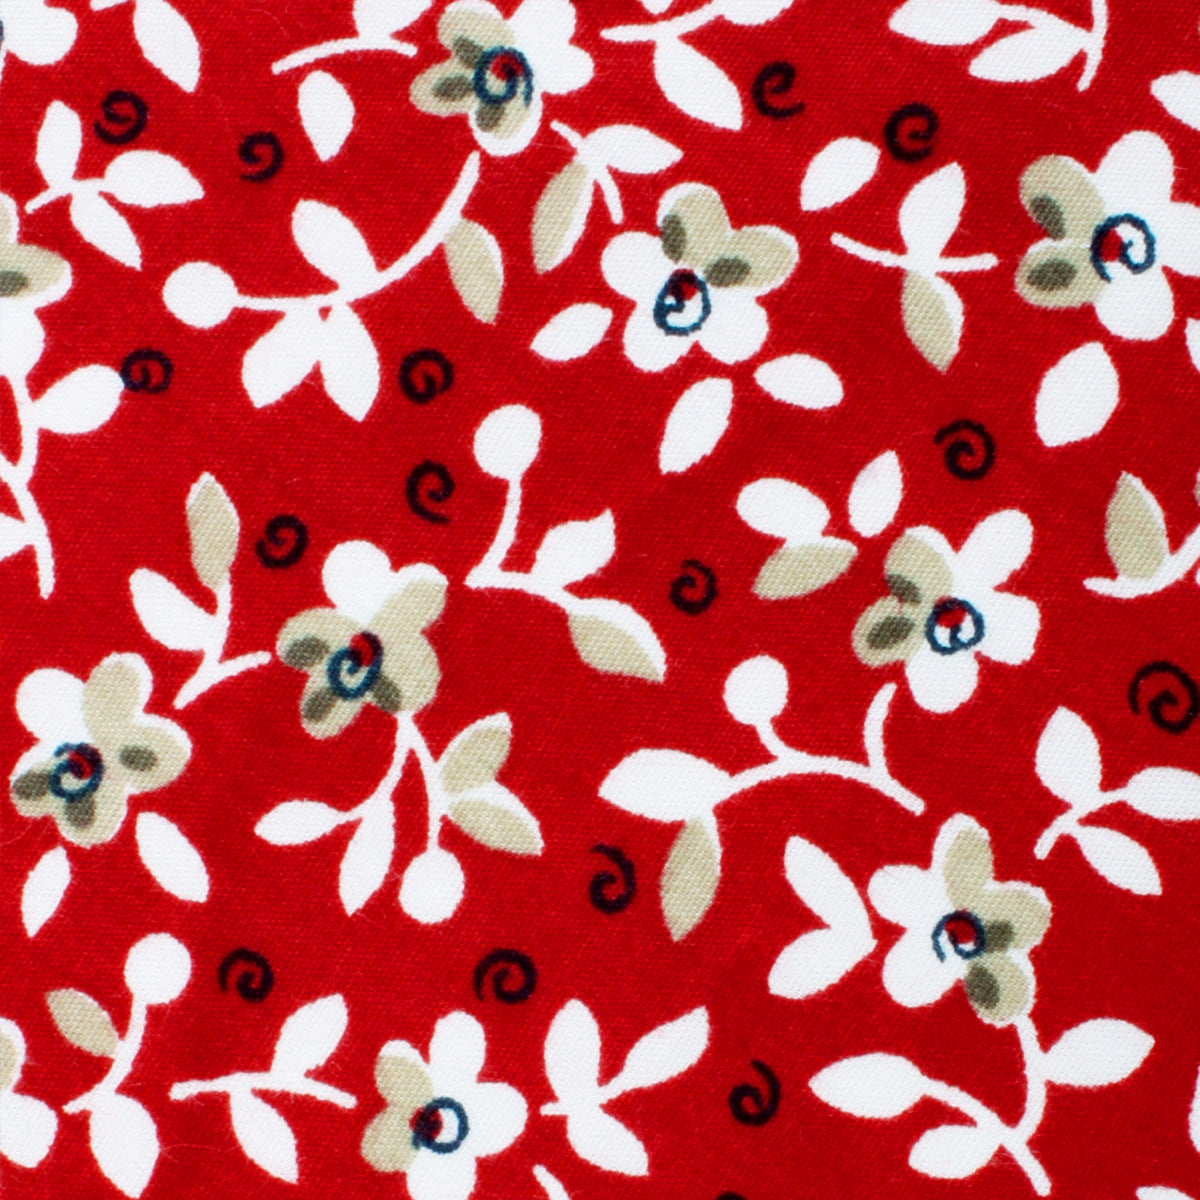 Yukata Red Floral Fabric Swatch